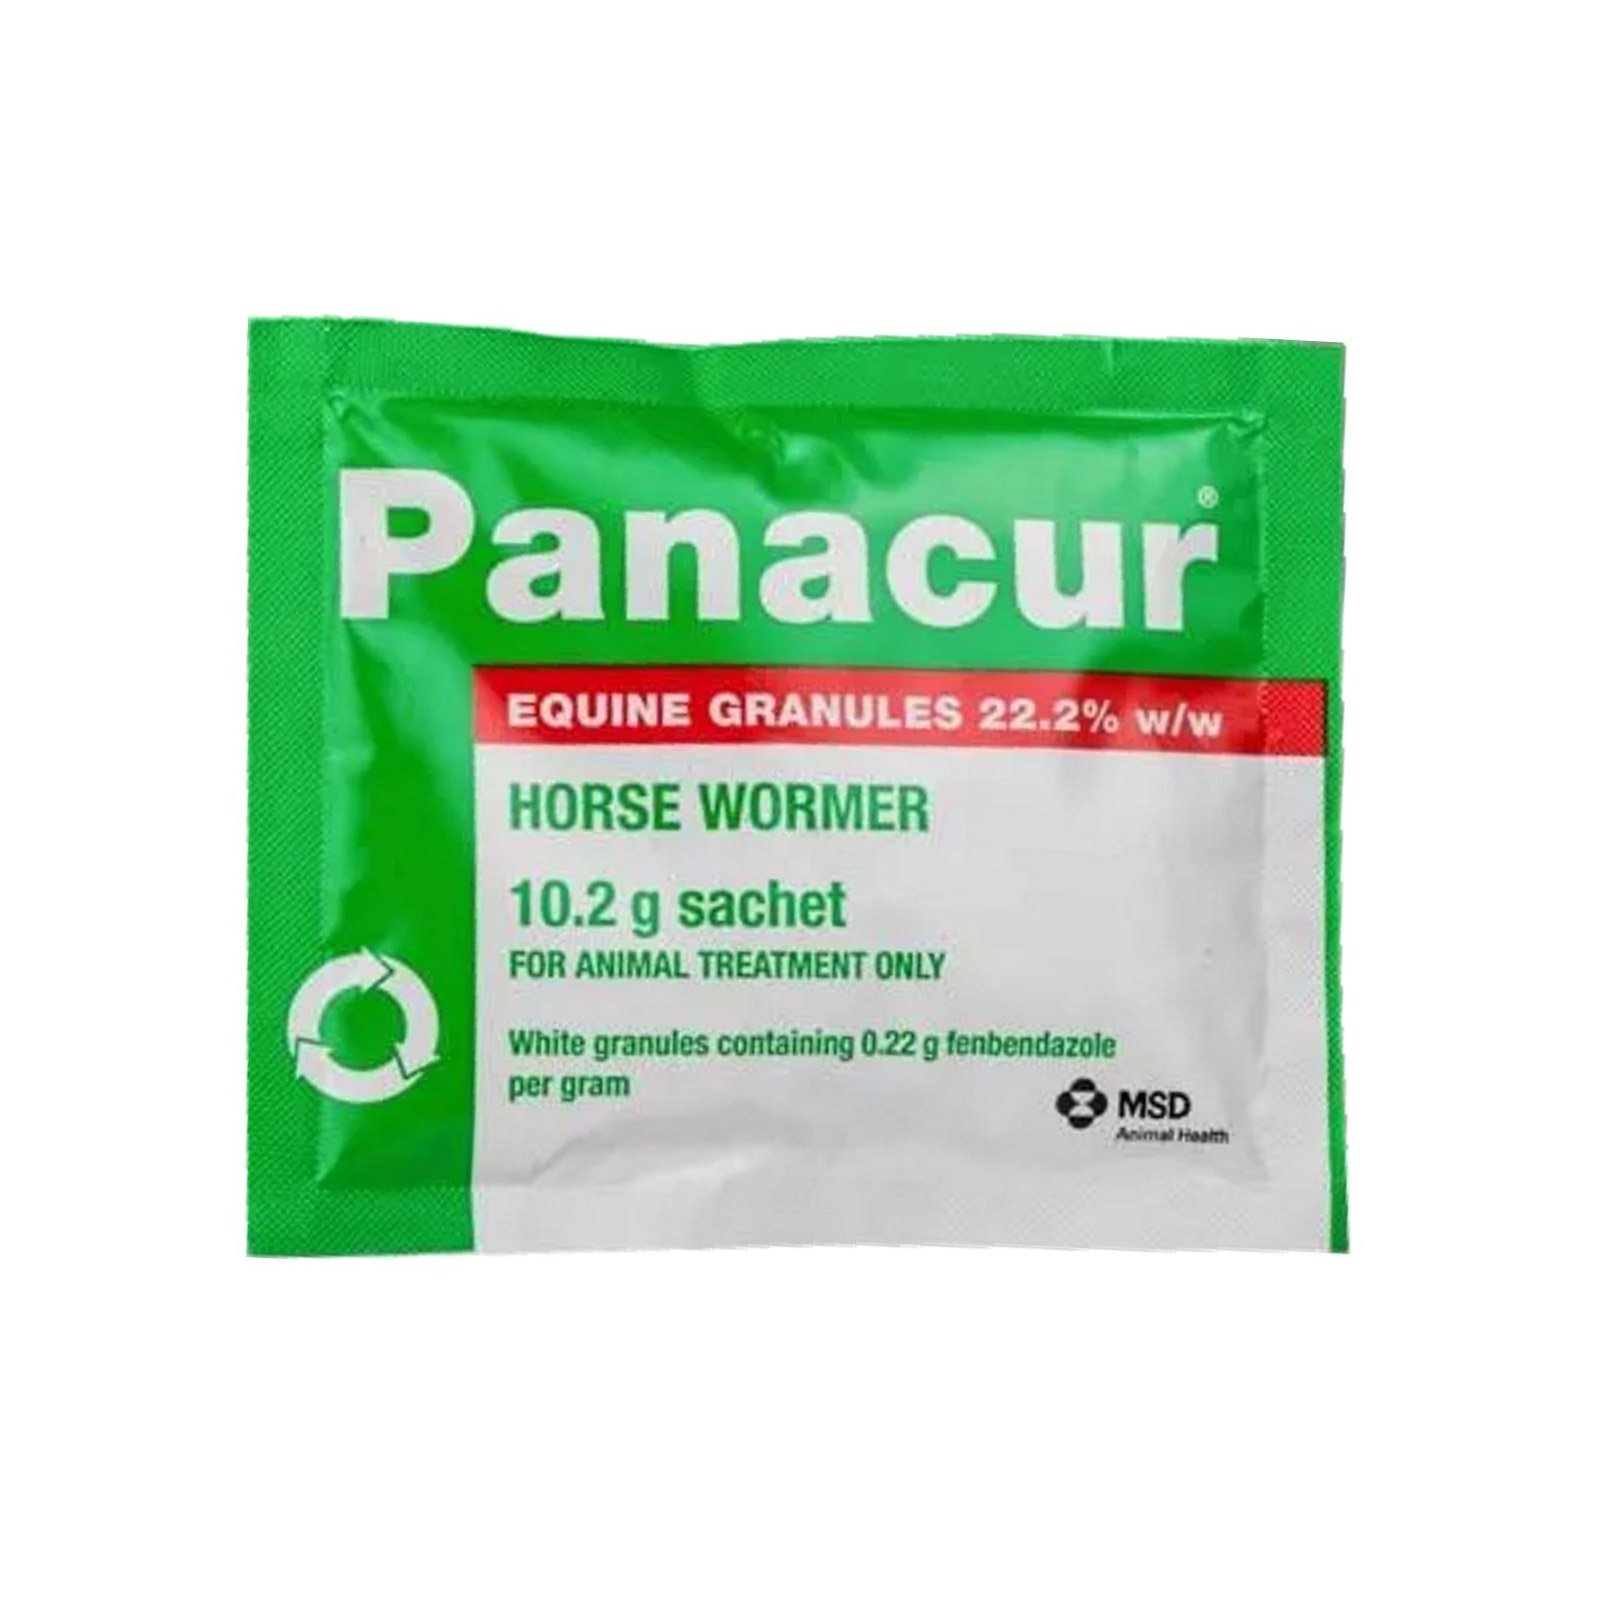 Panacur Equine Granules for Horse